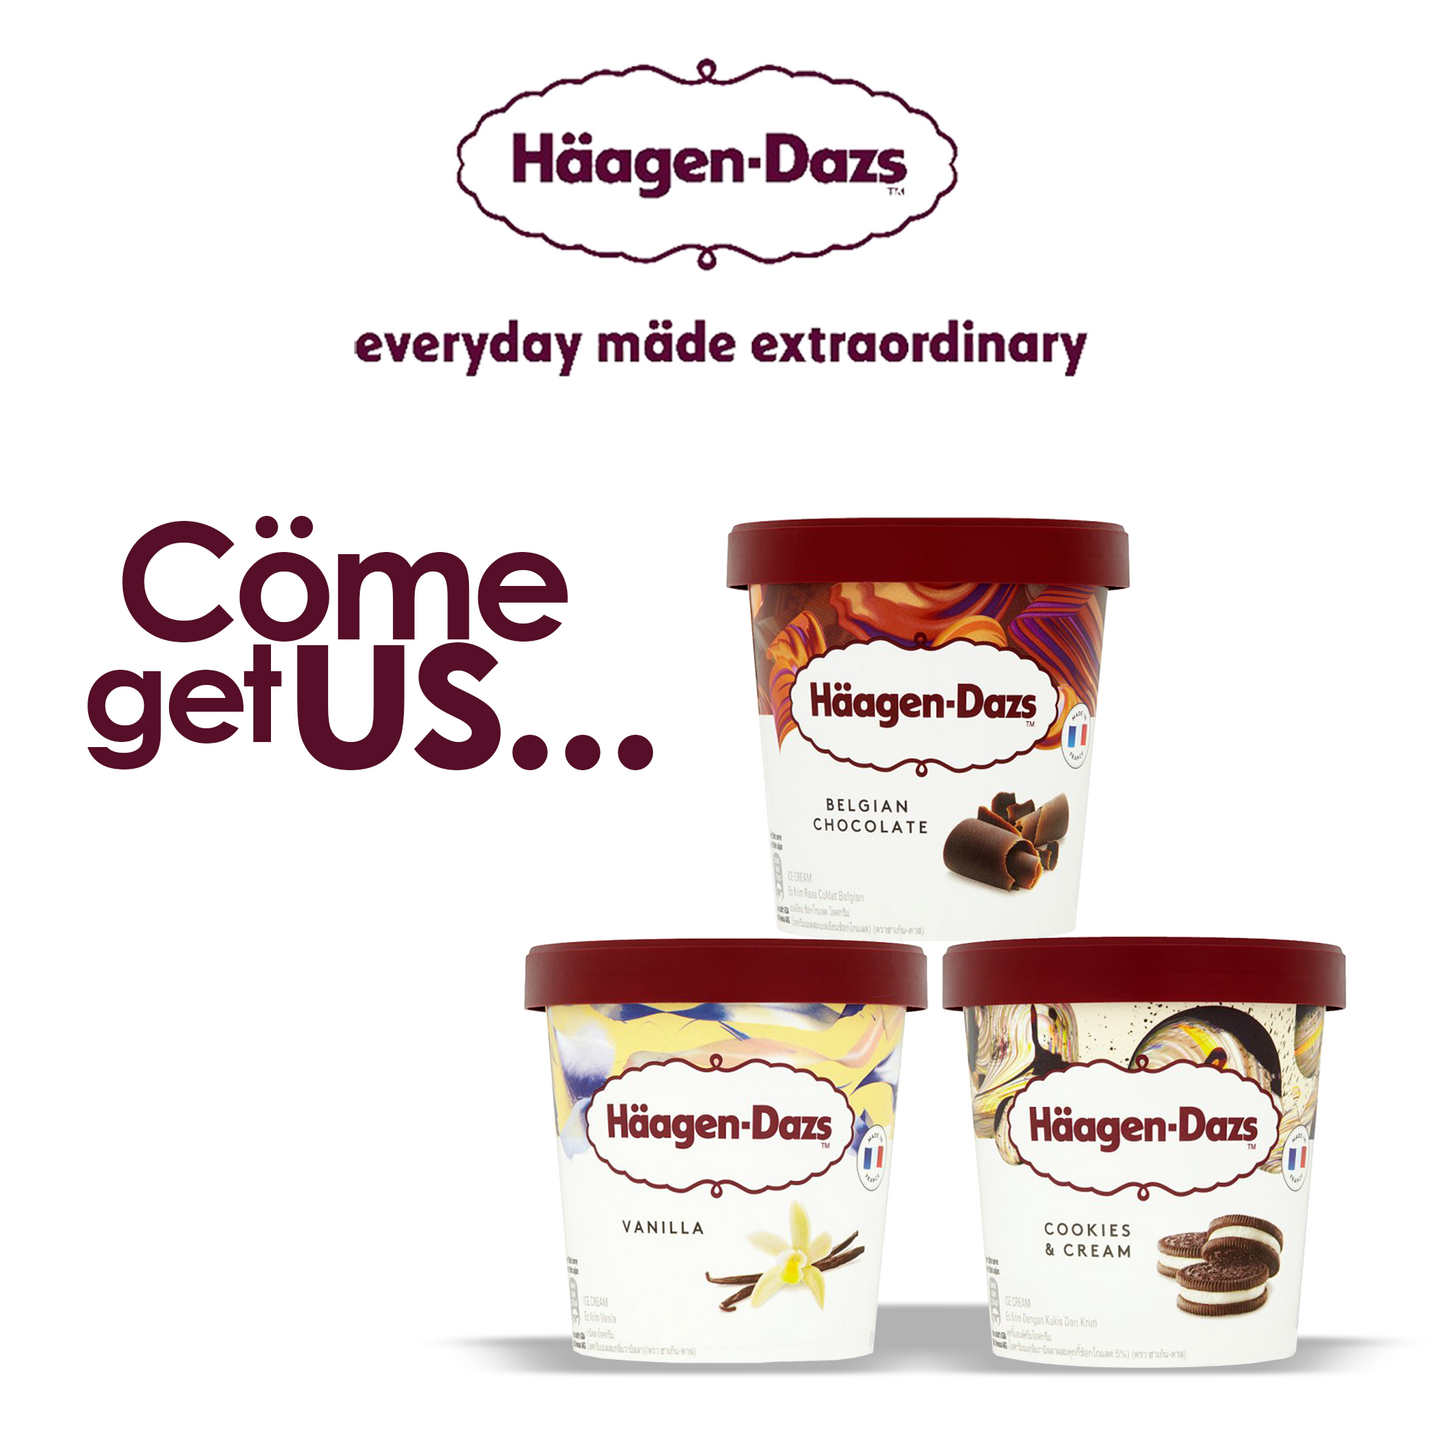 Häagen-Dazs Ice Cream